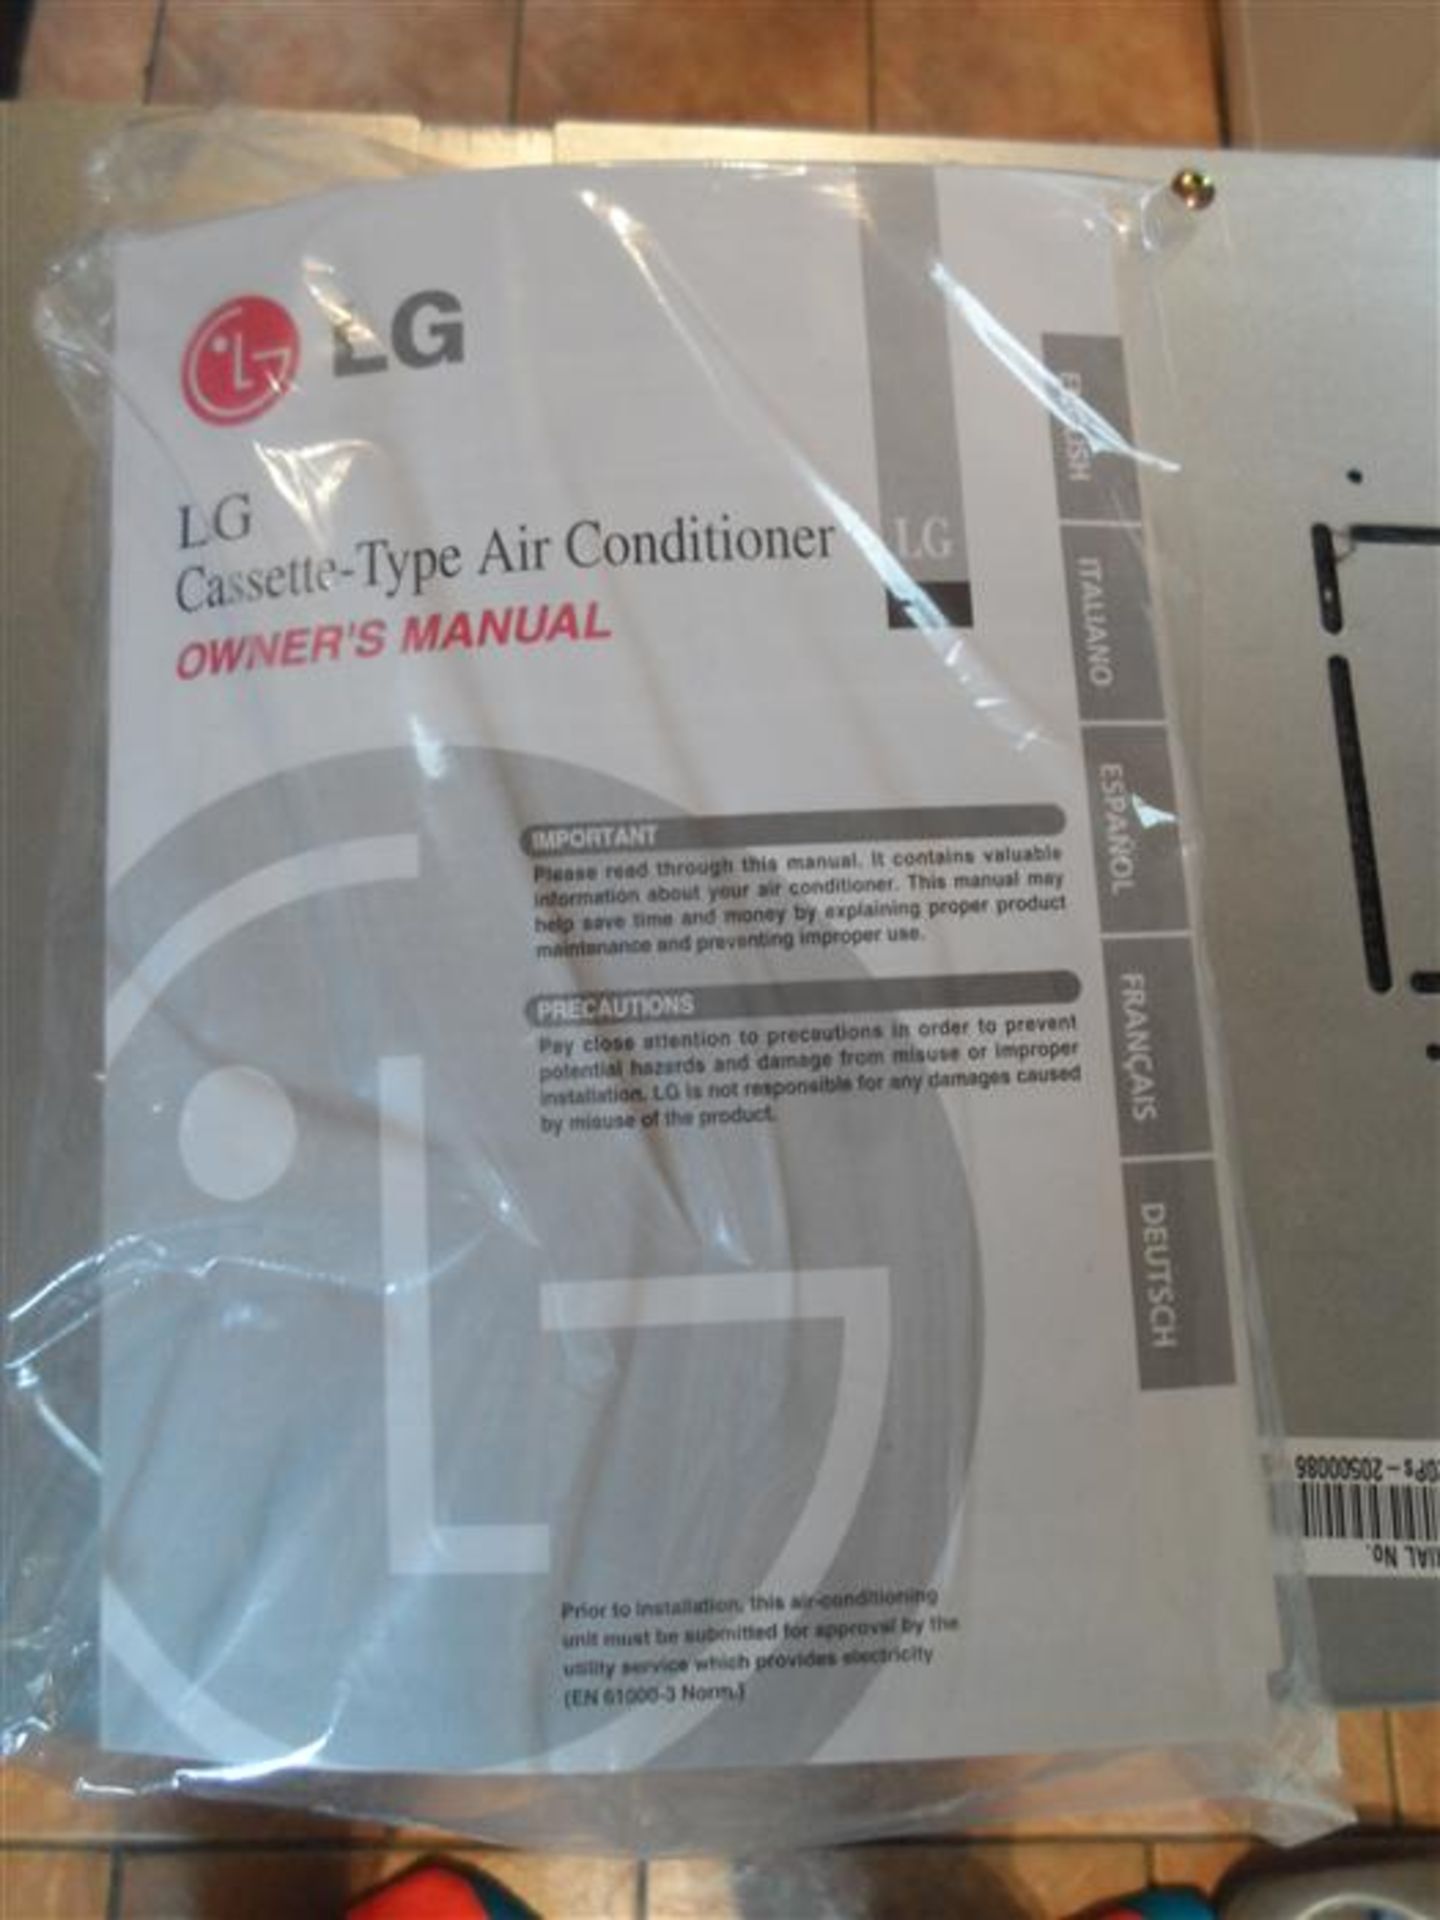 LG Cassette-Type Air Conditioner Unit - Image 10 of 12